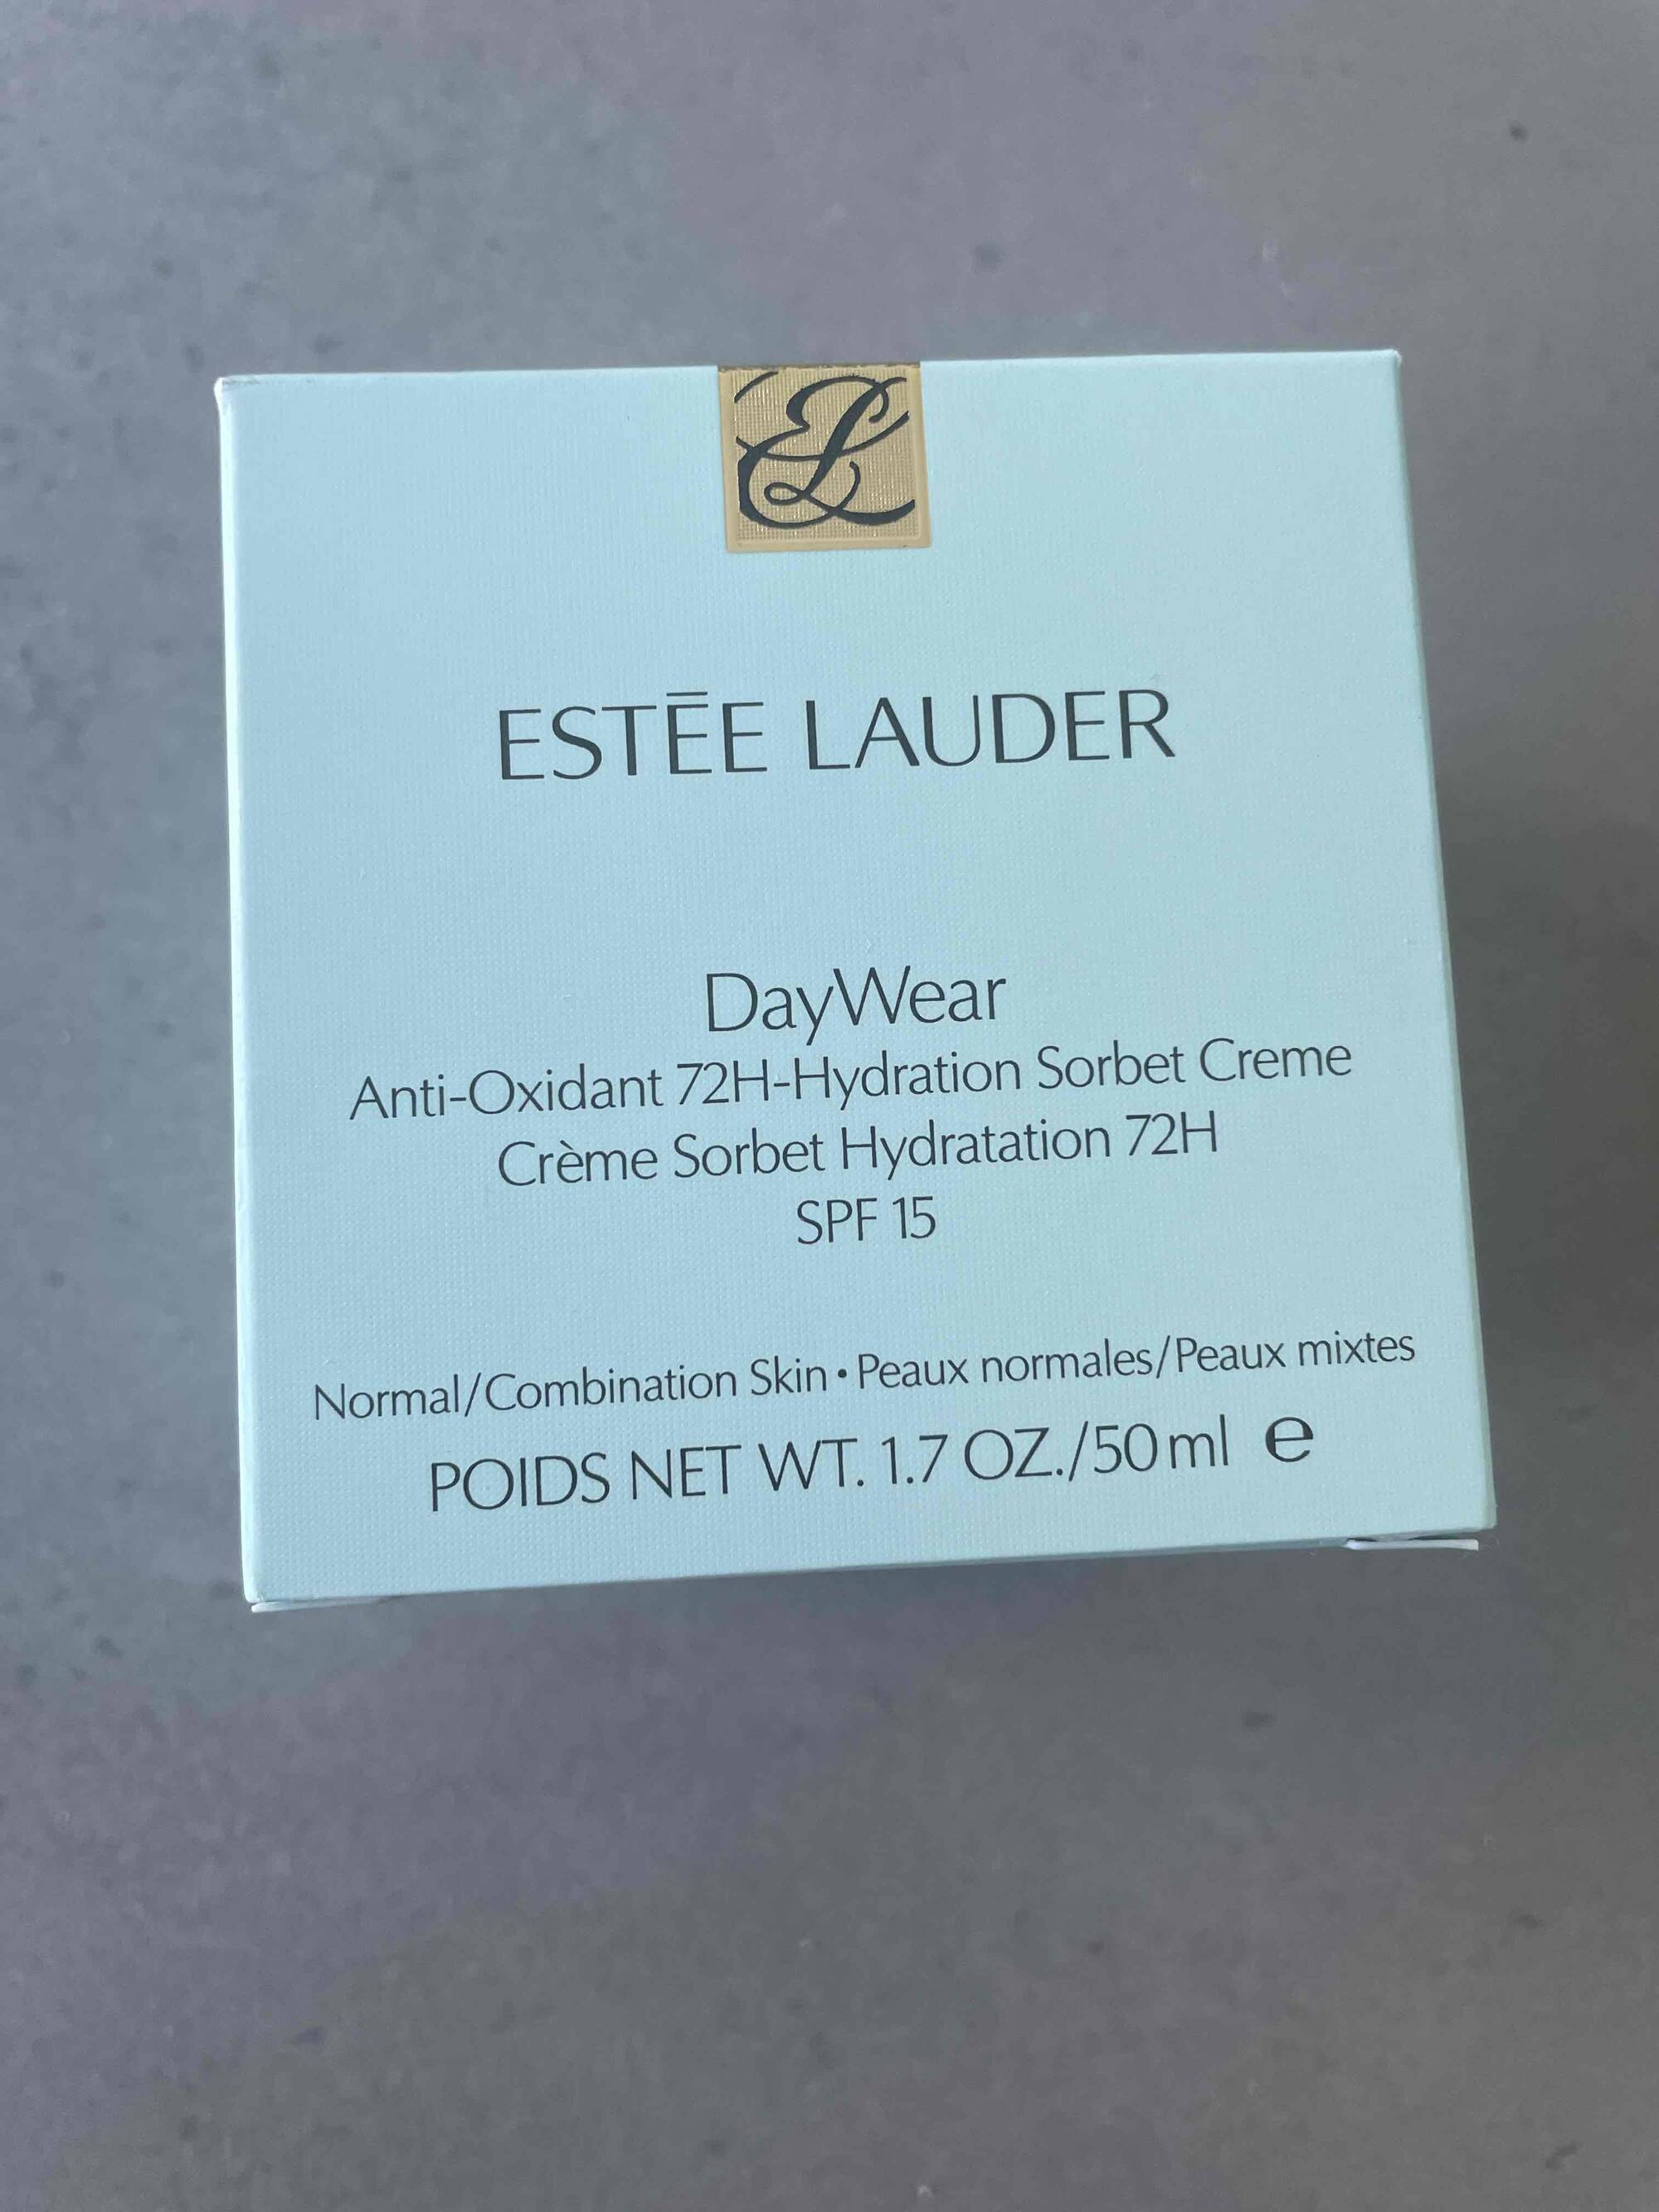 ESTEE LAUDER - Daywear - Crème sorbet hydratation 72h SPF15